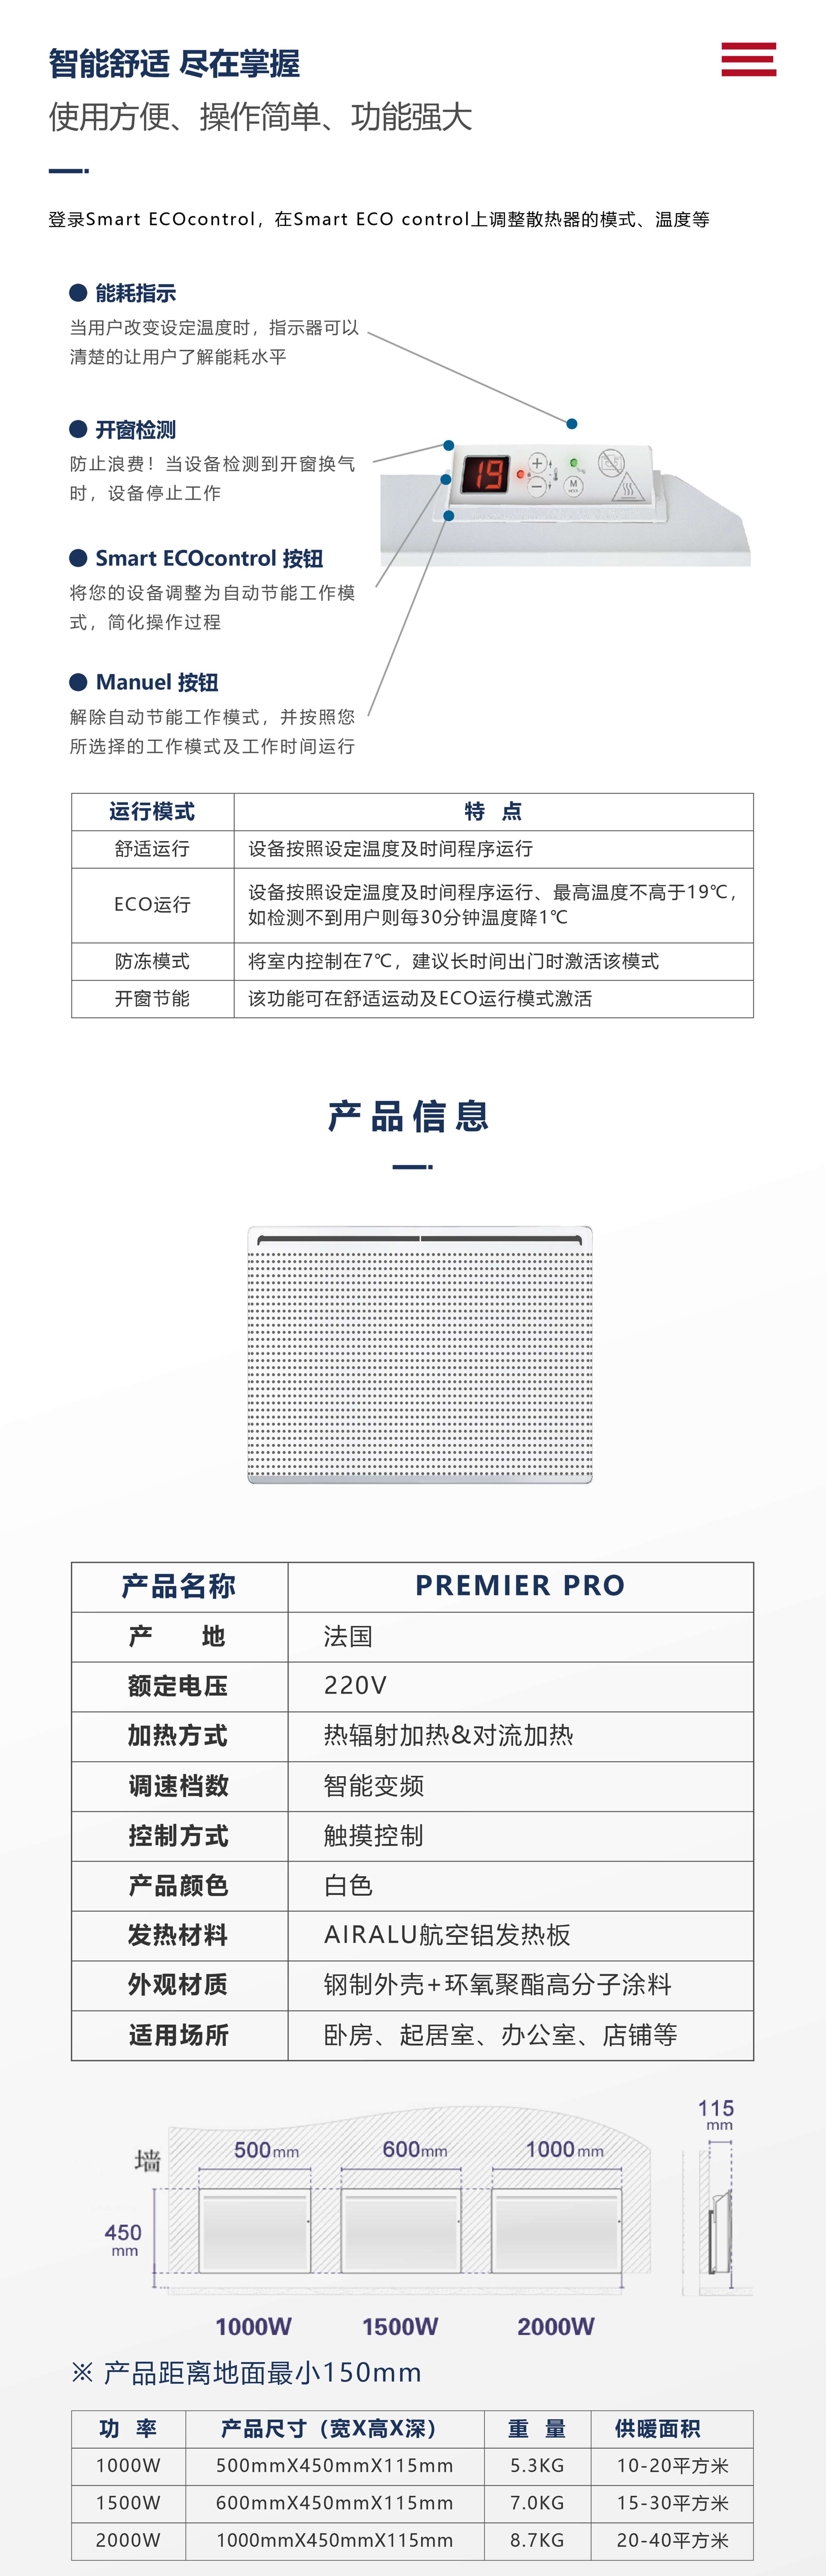 05-Premier PRO产品介绍3.jpg